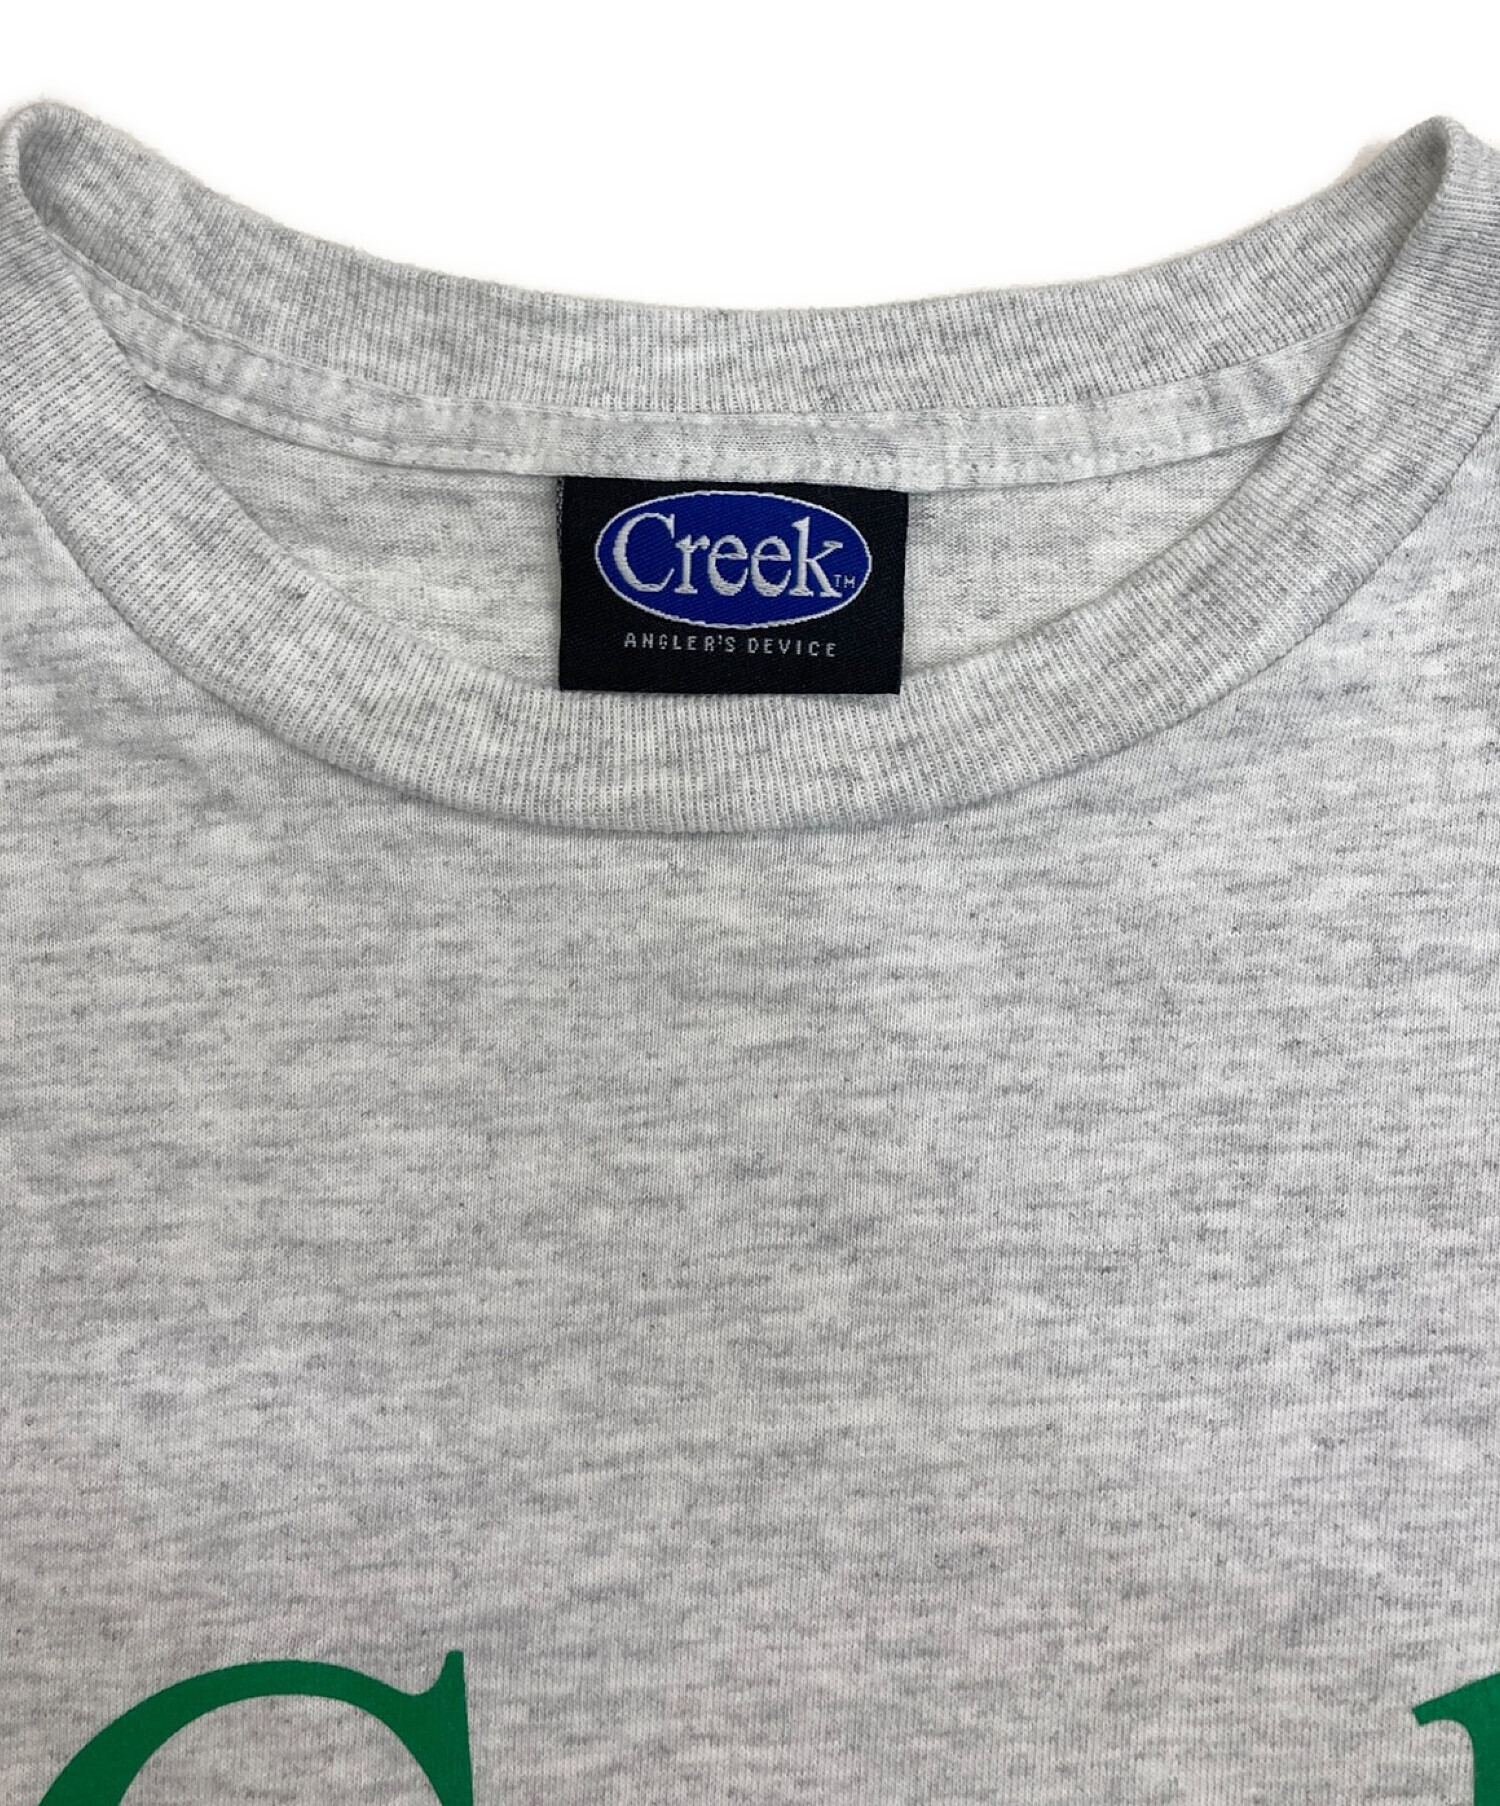 Creek (クリーク) ロゴTシャツ グレー サイズ:M